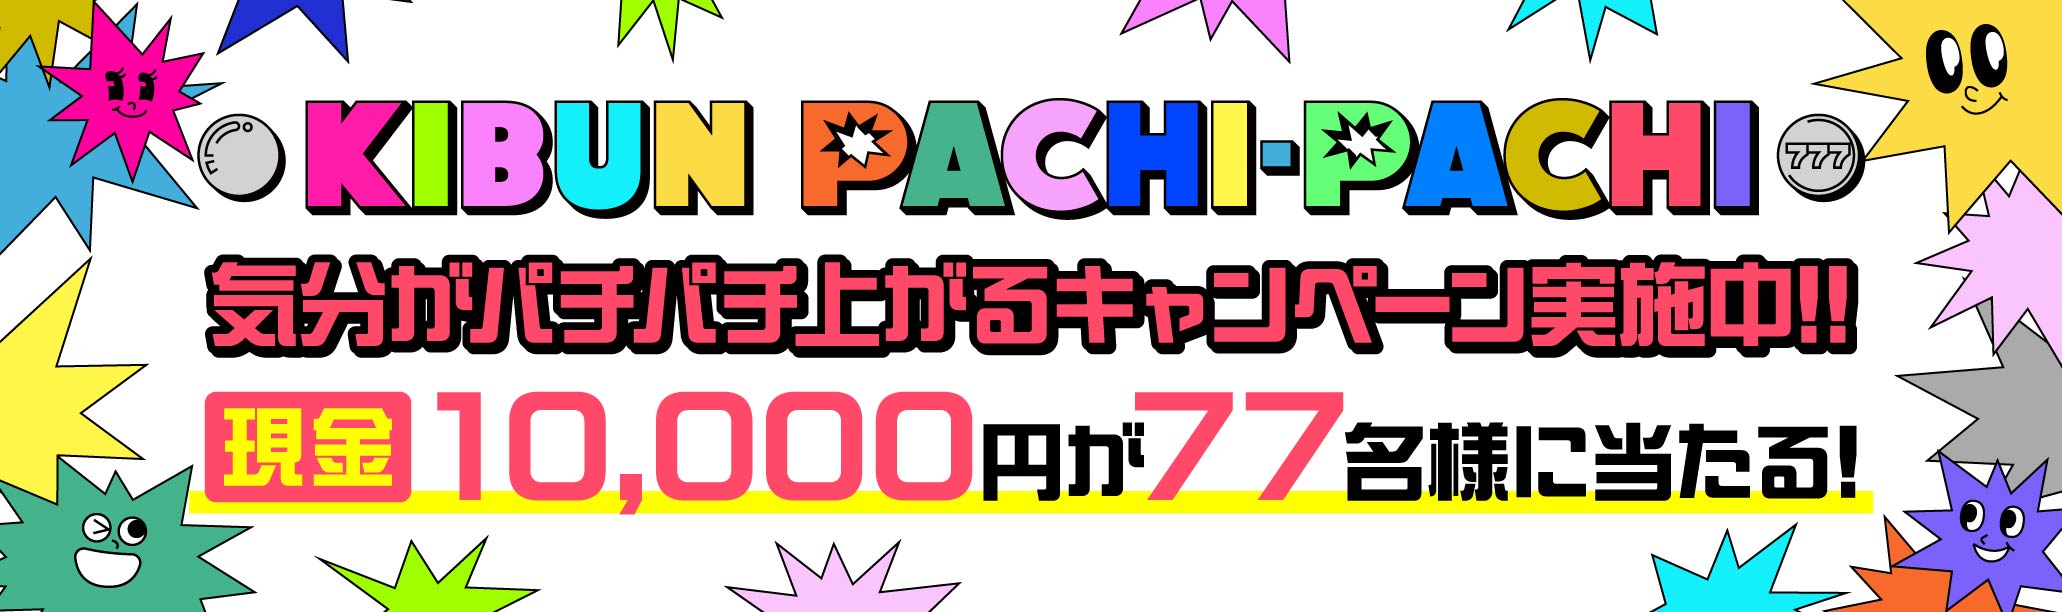 KIBUN PACHI-PACHI キャンペーン